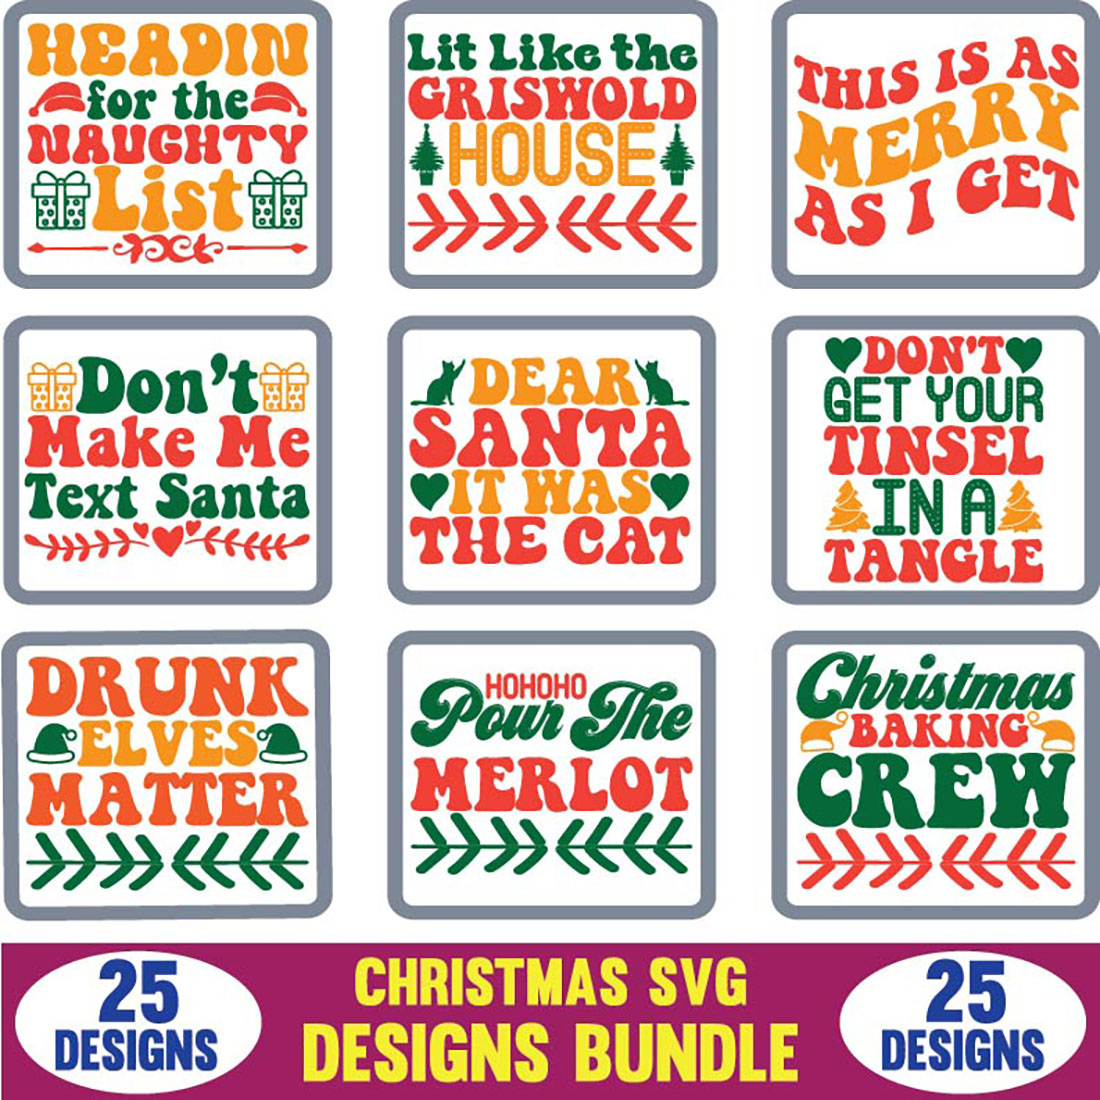 Christmas SVG Designs Bundle image preview.